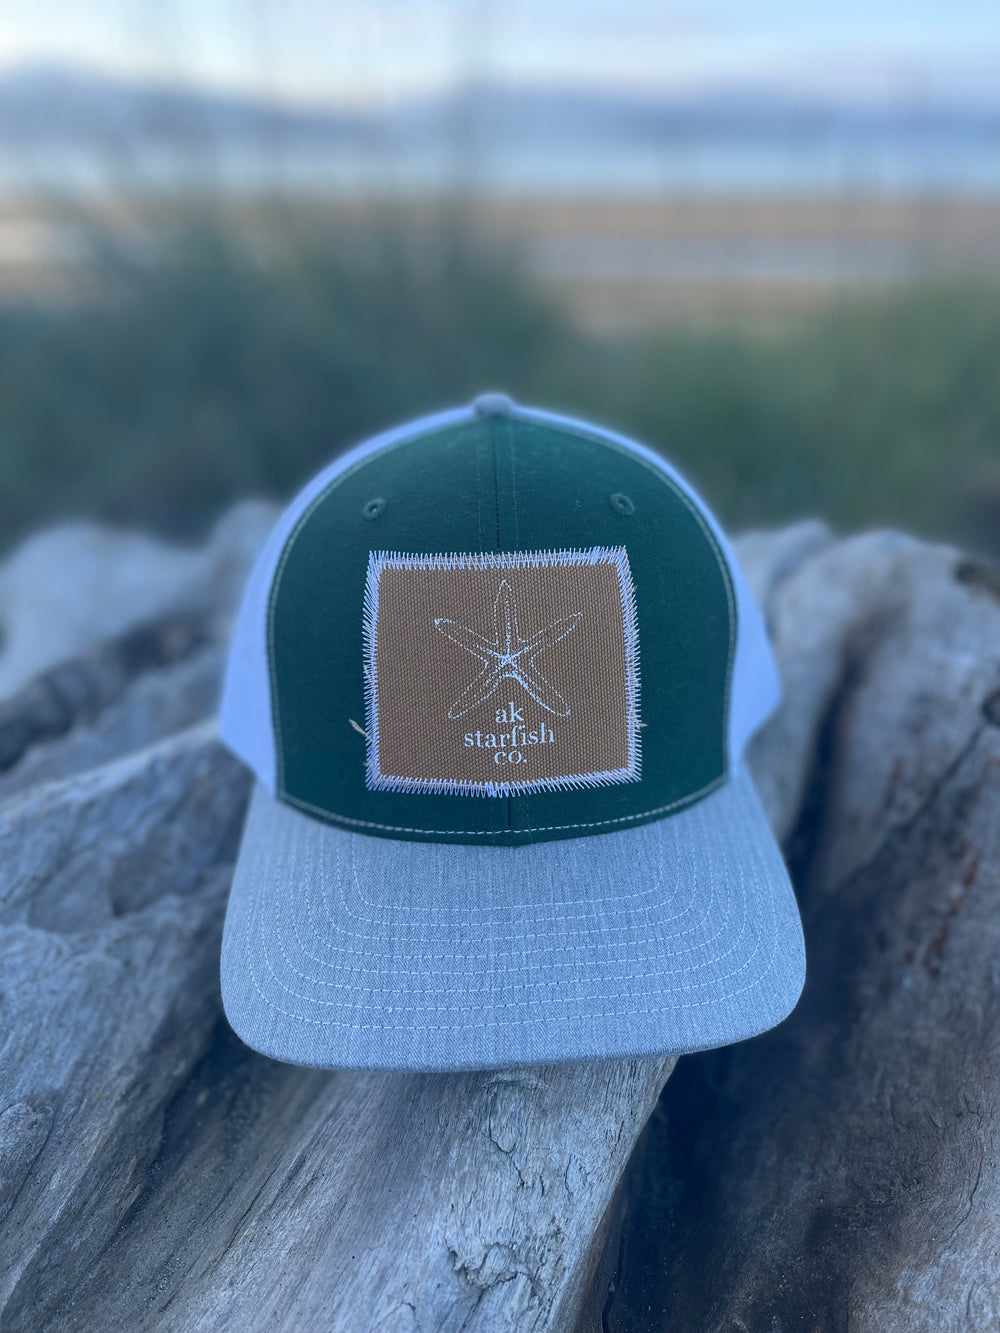 Marine / Heather Grey / White AK Starfish Co. Patch Hat. $38.00